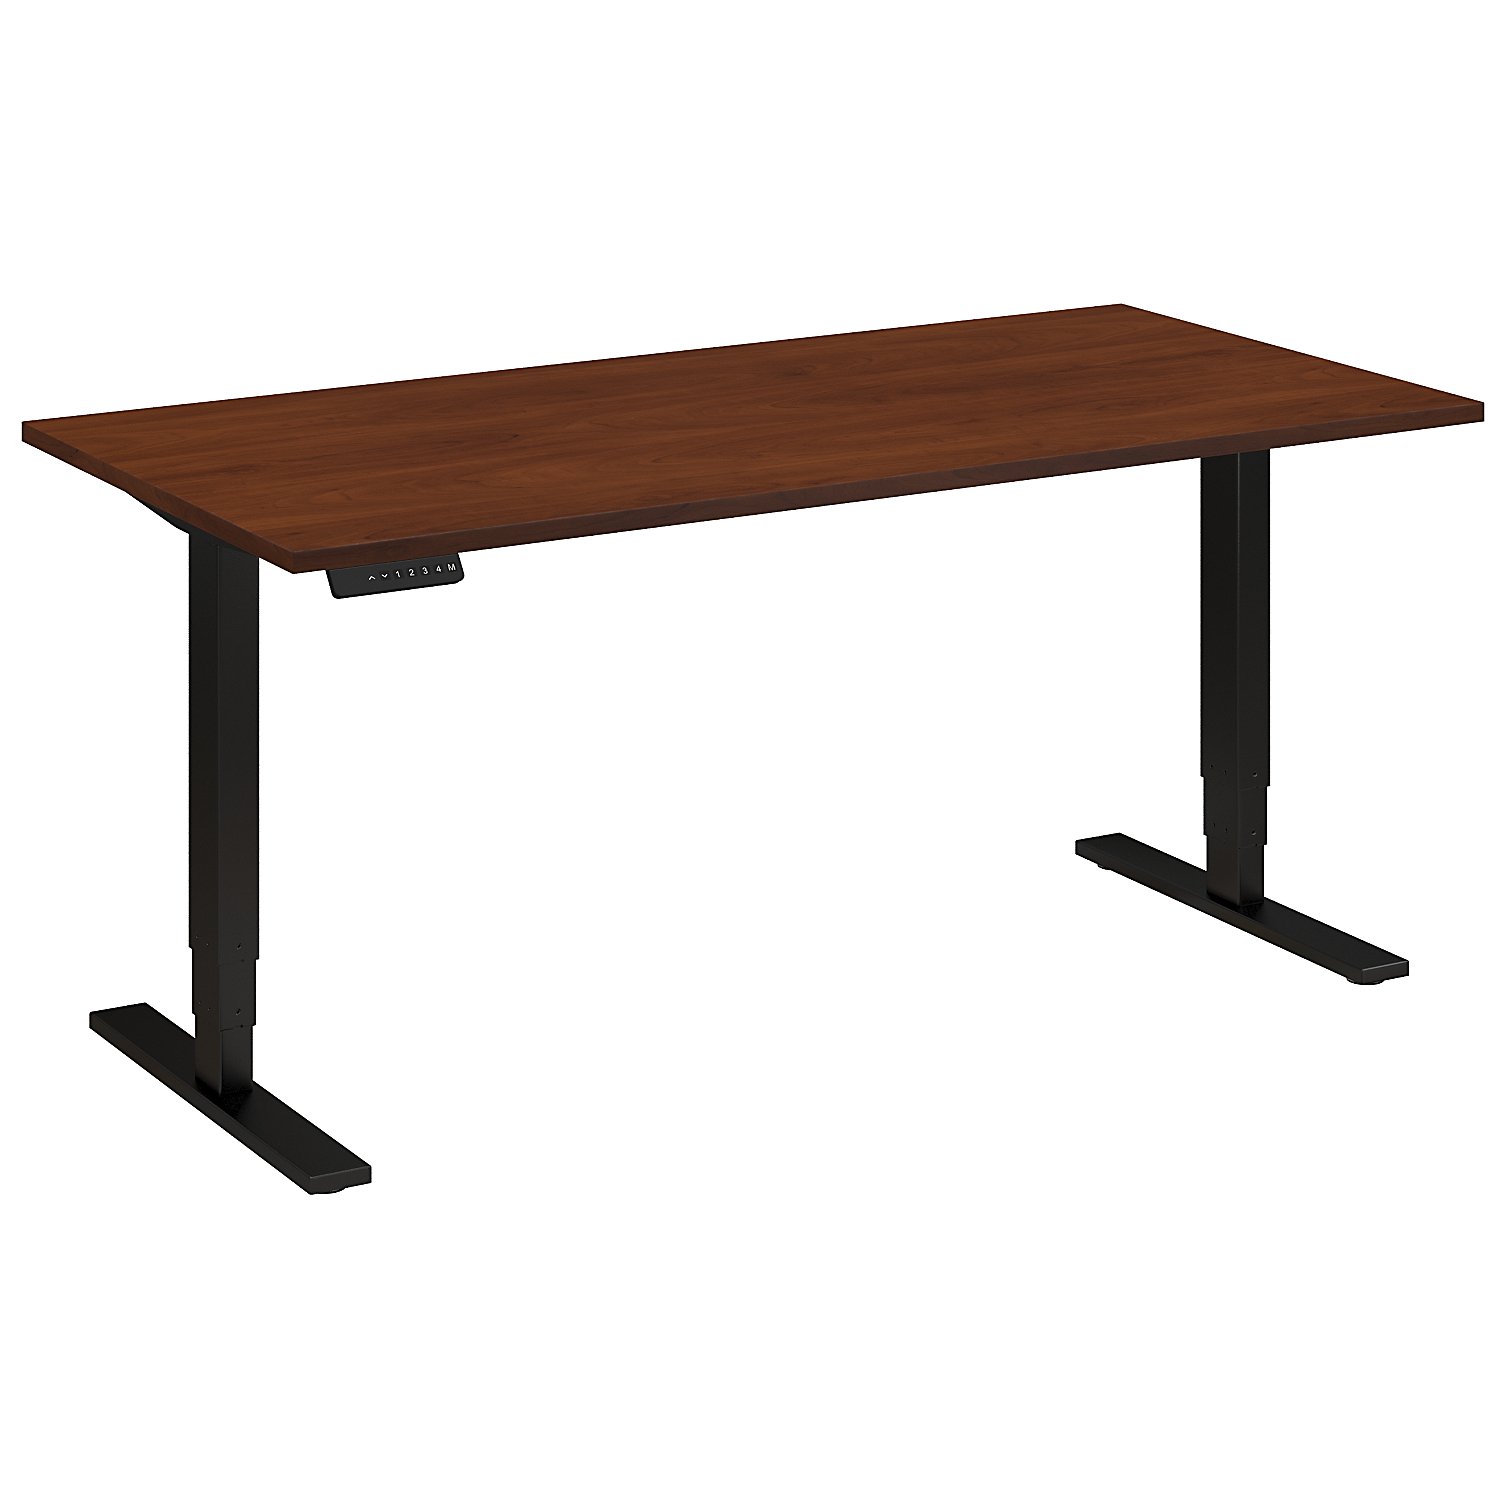 Adjustable Height Desks from BBF - Shown in Hansen Cherry woodgrain laminate top and black base